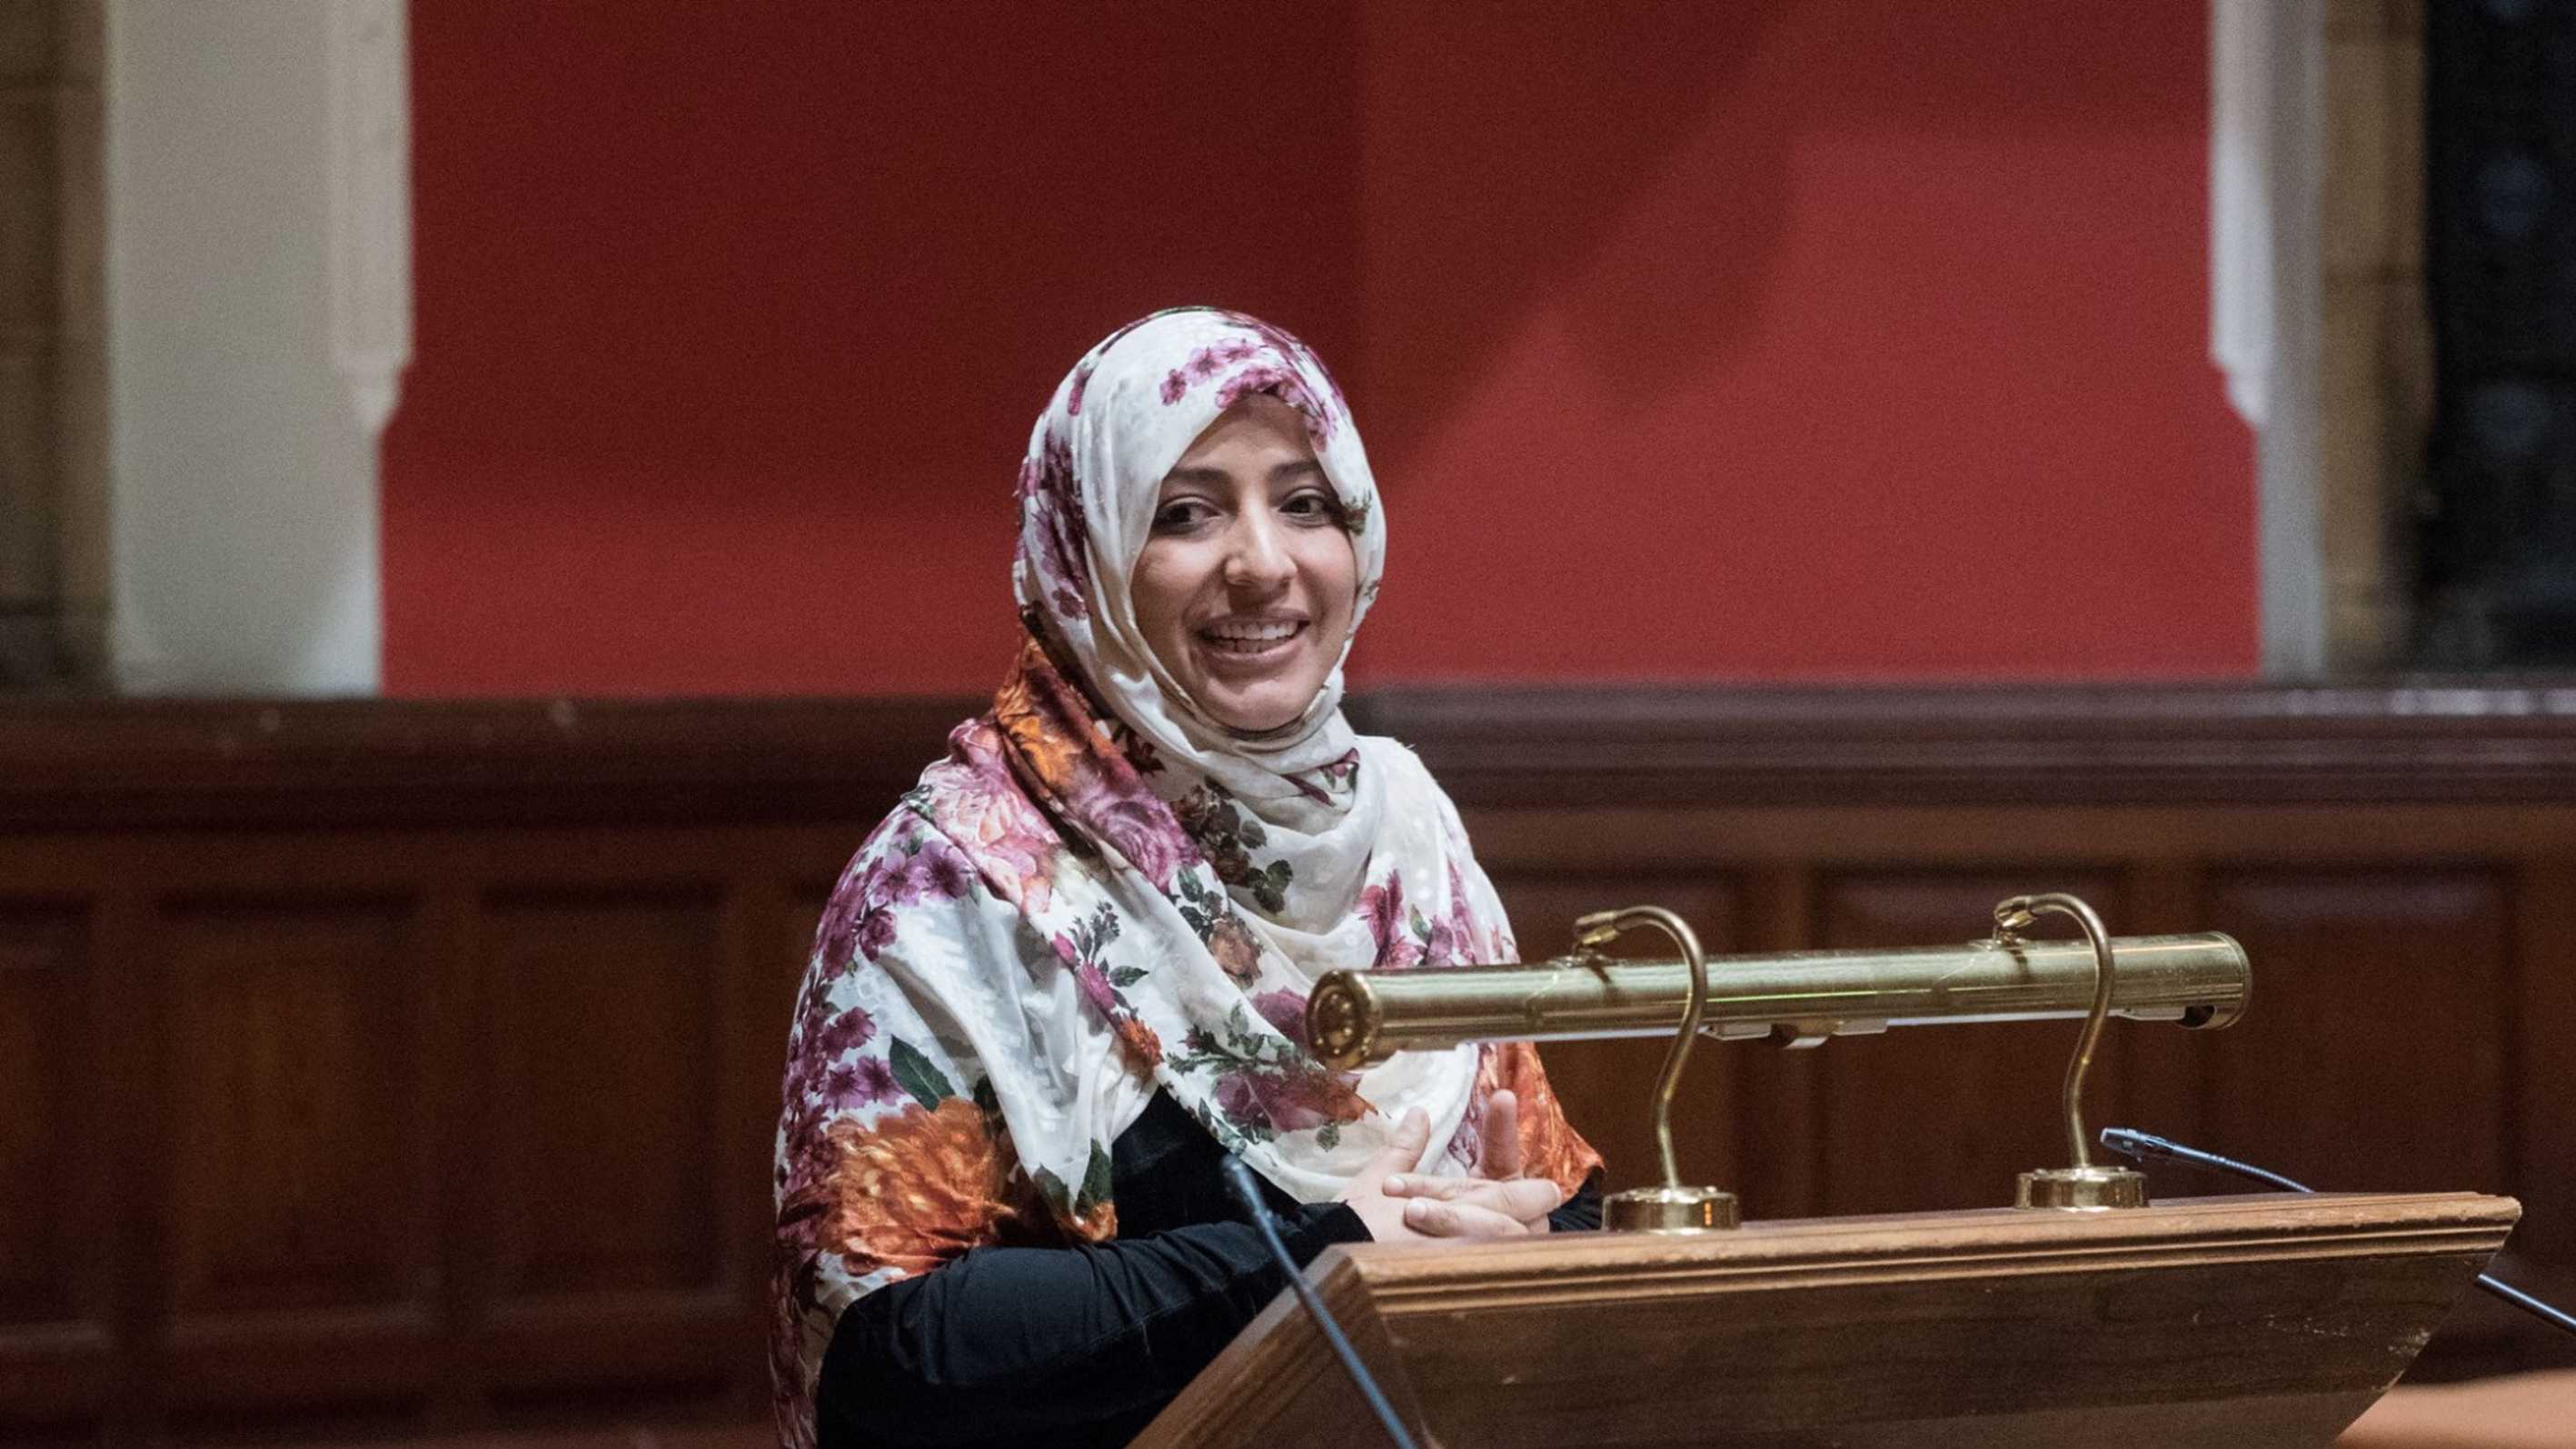 Mrs. Tawakkol Karman’s speech at the Oxford University